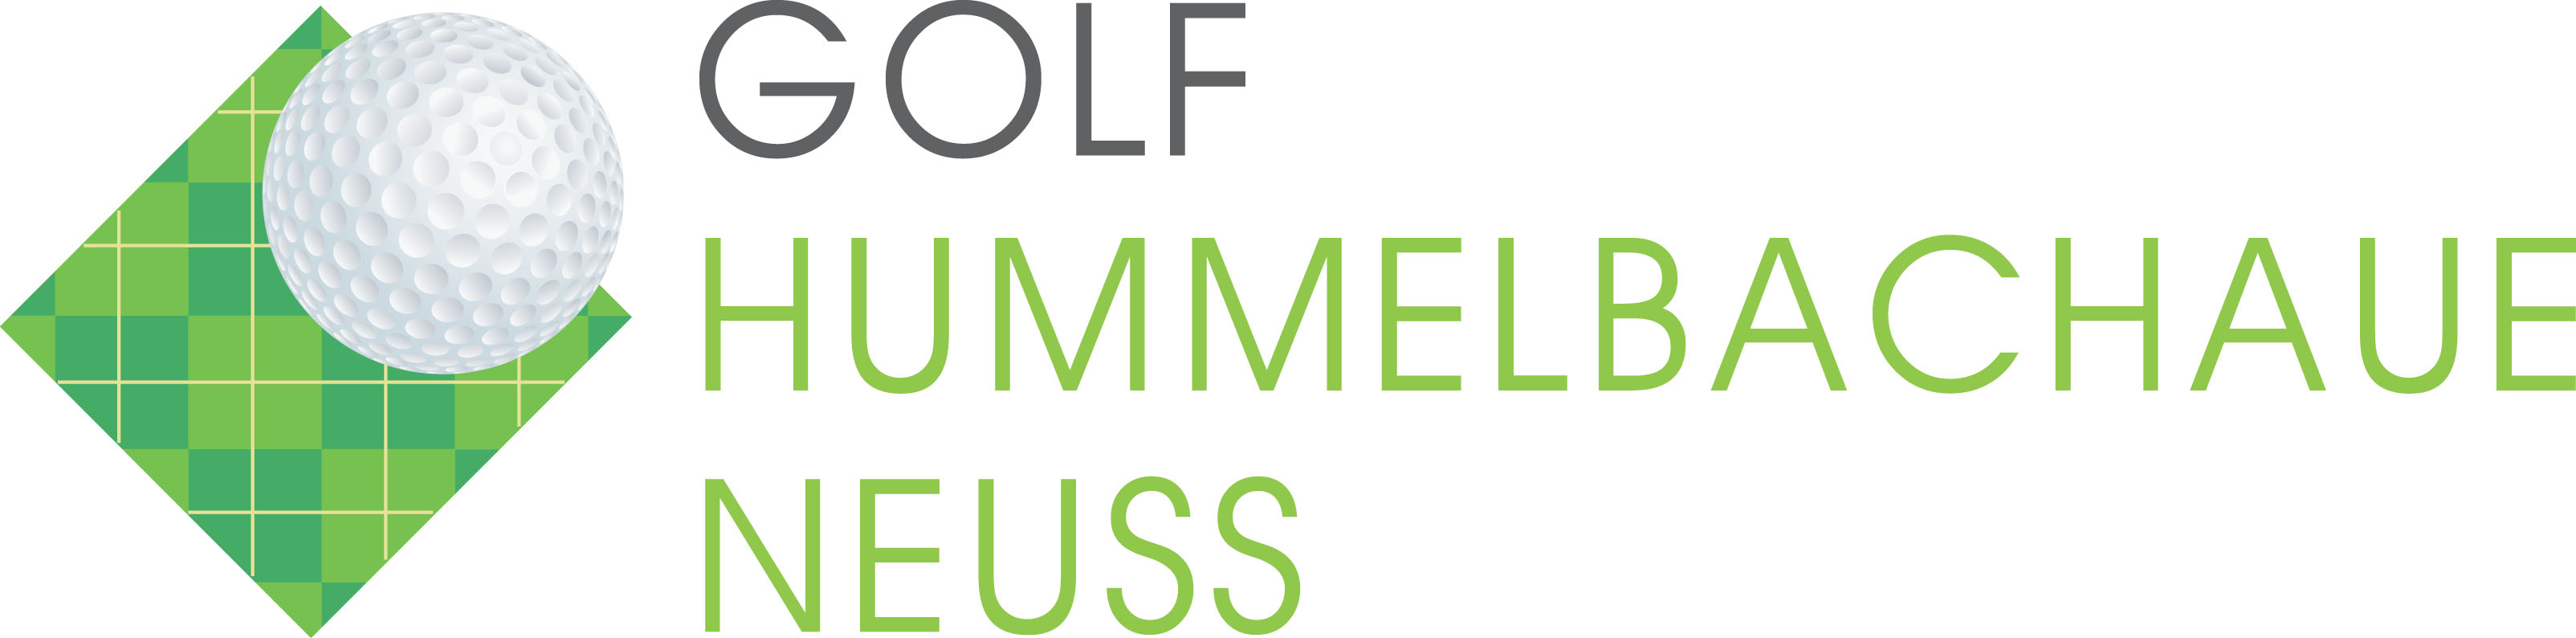 Golf Hummelbachaue